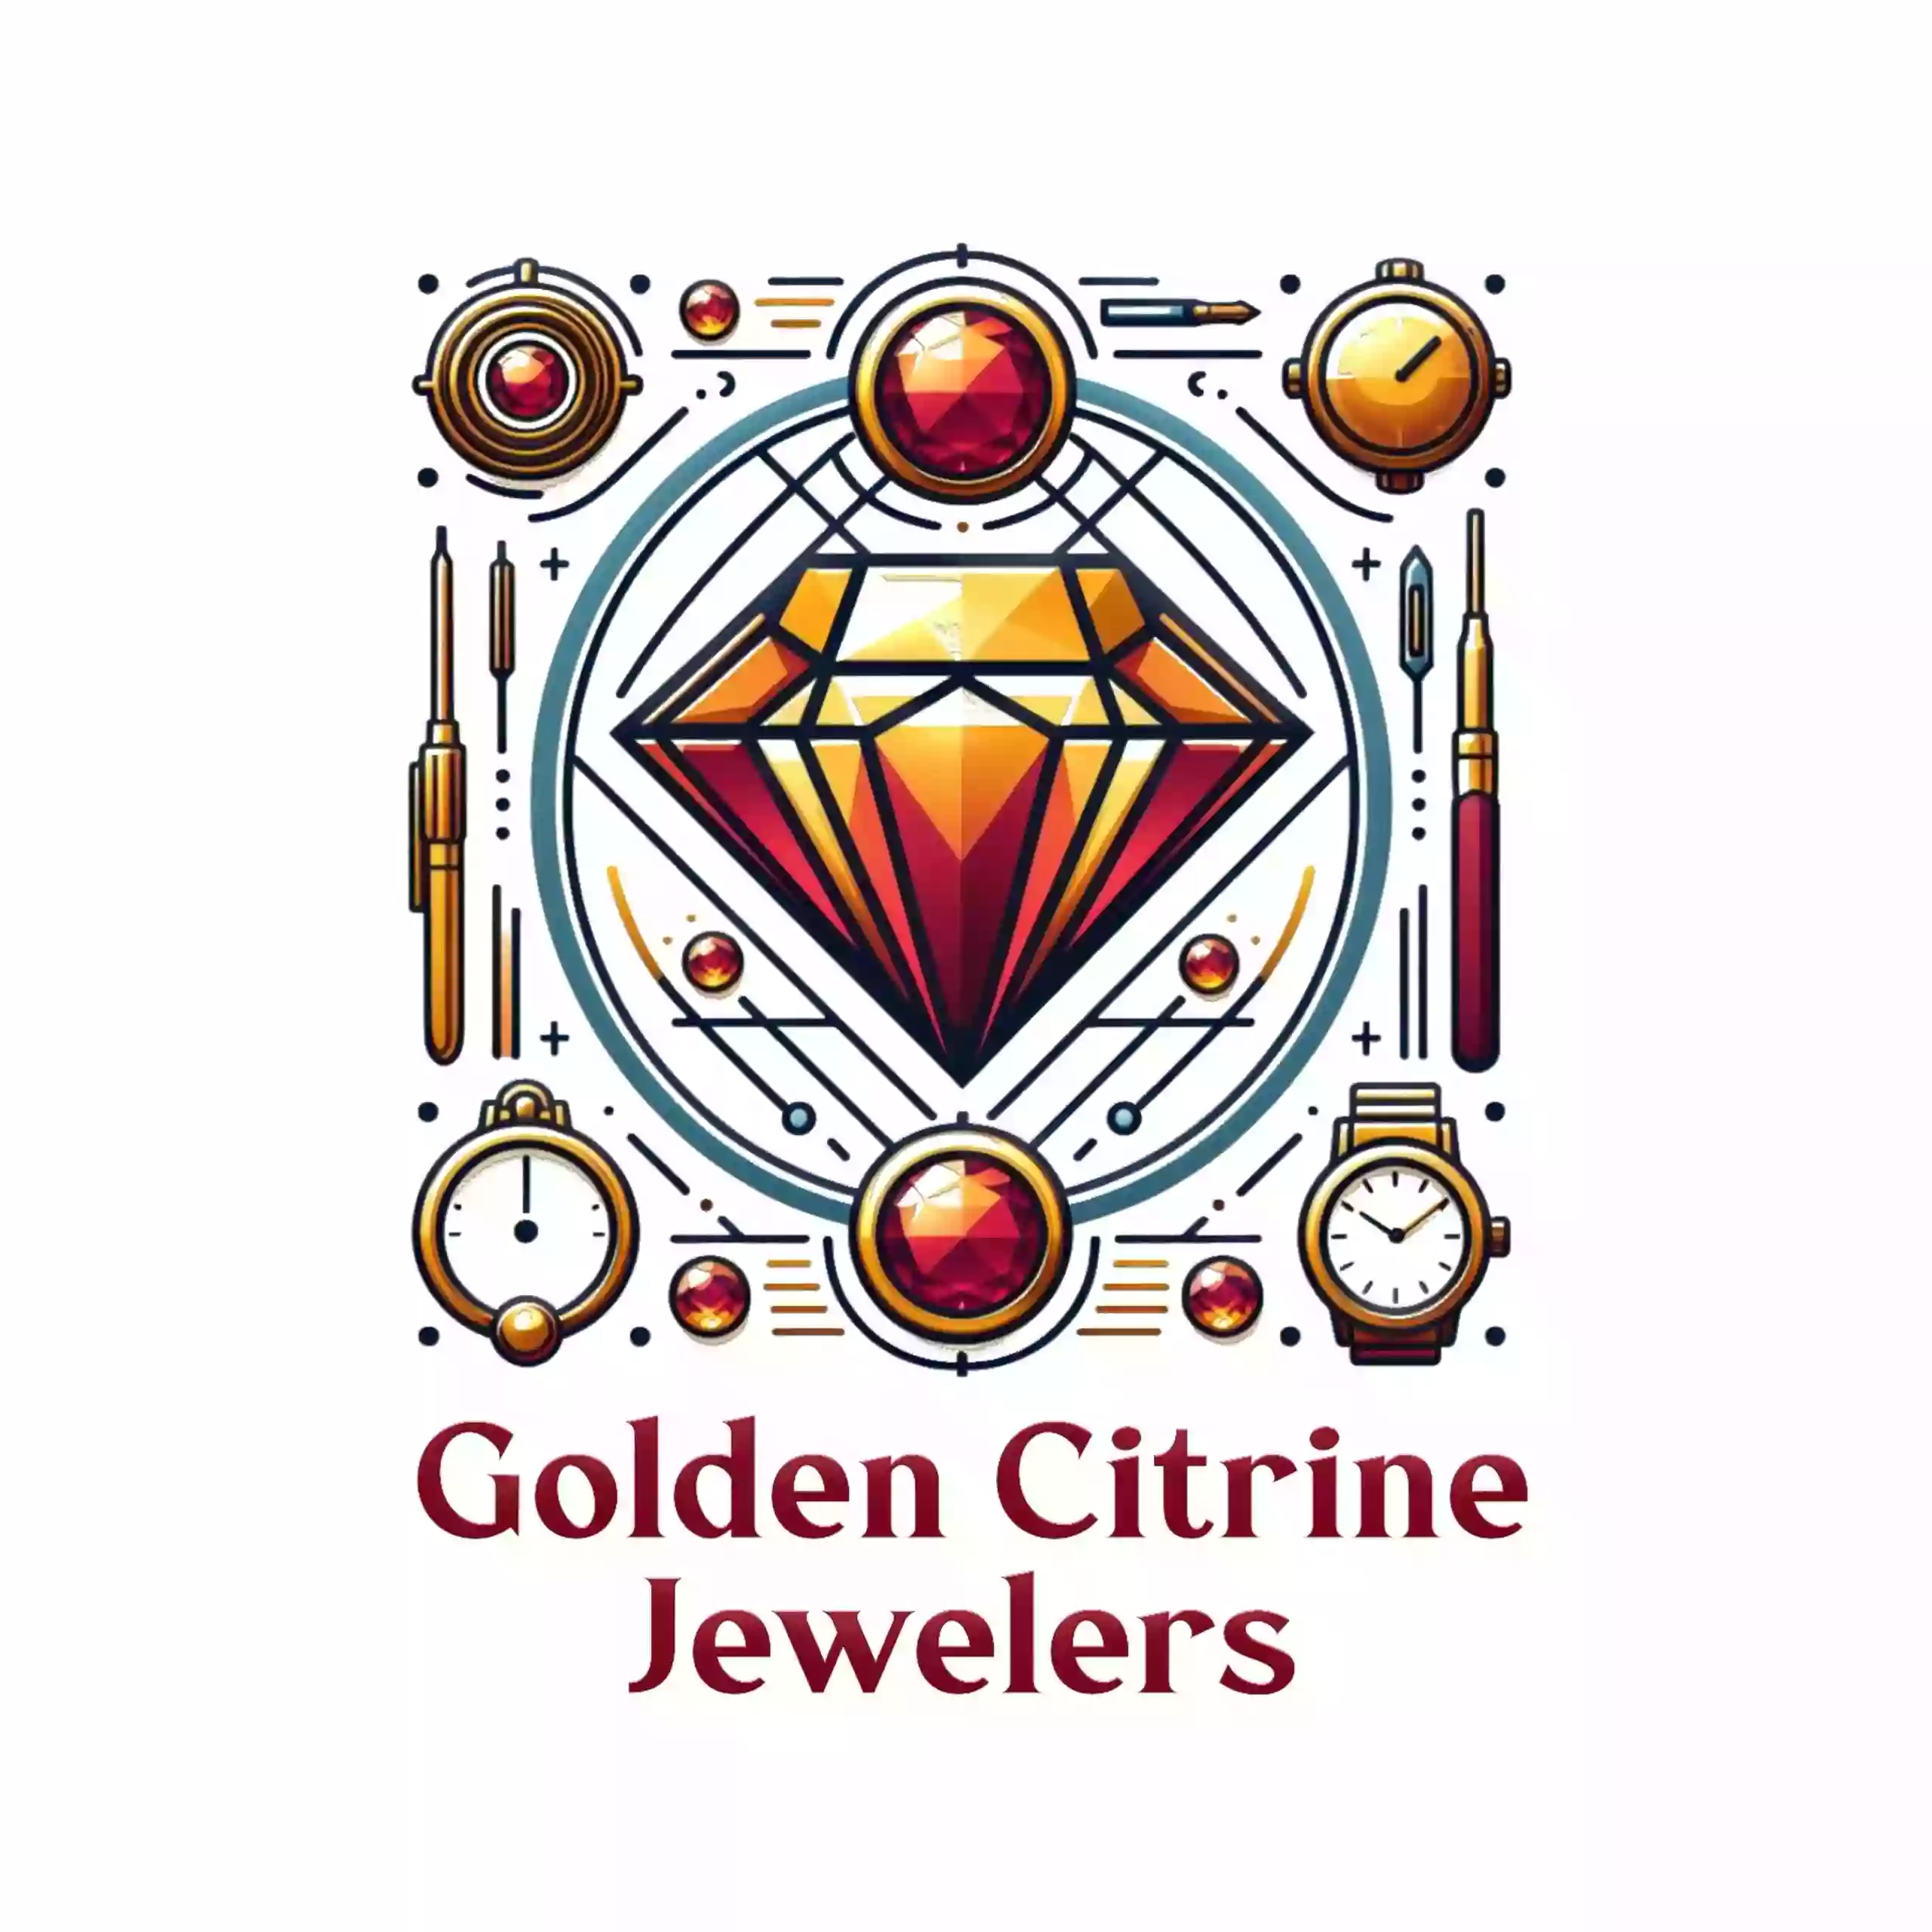 Golden Citrine Jewelers